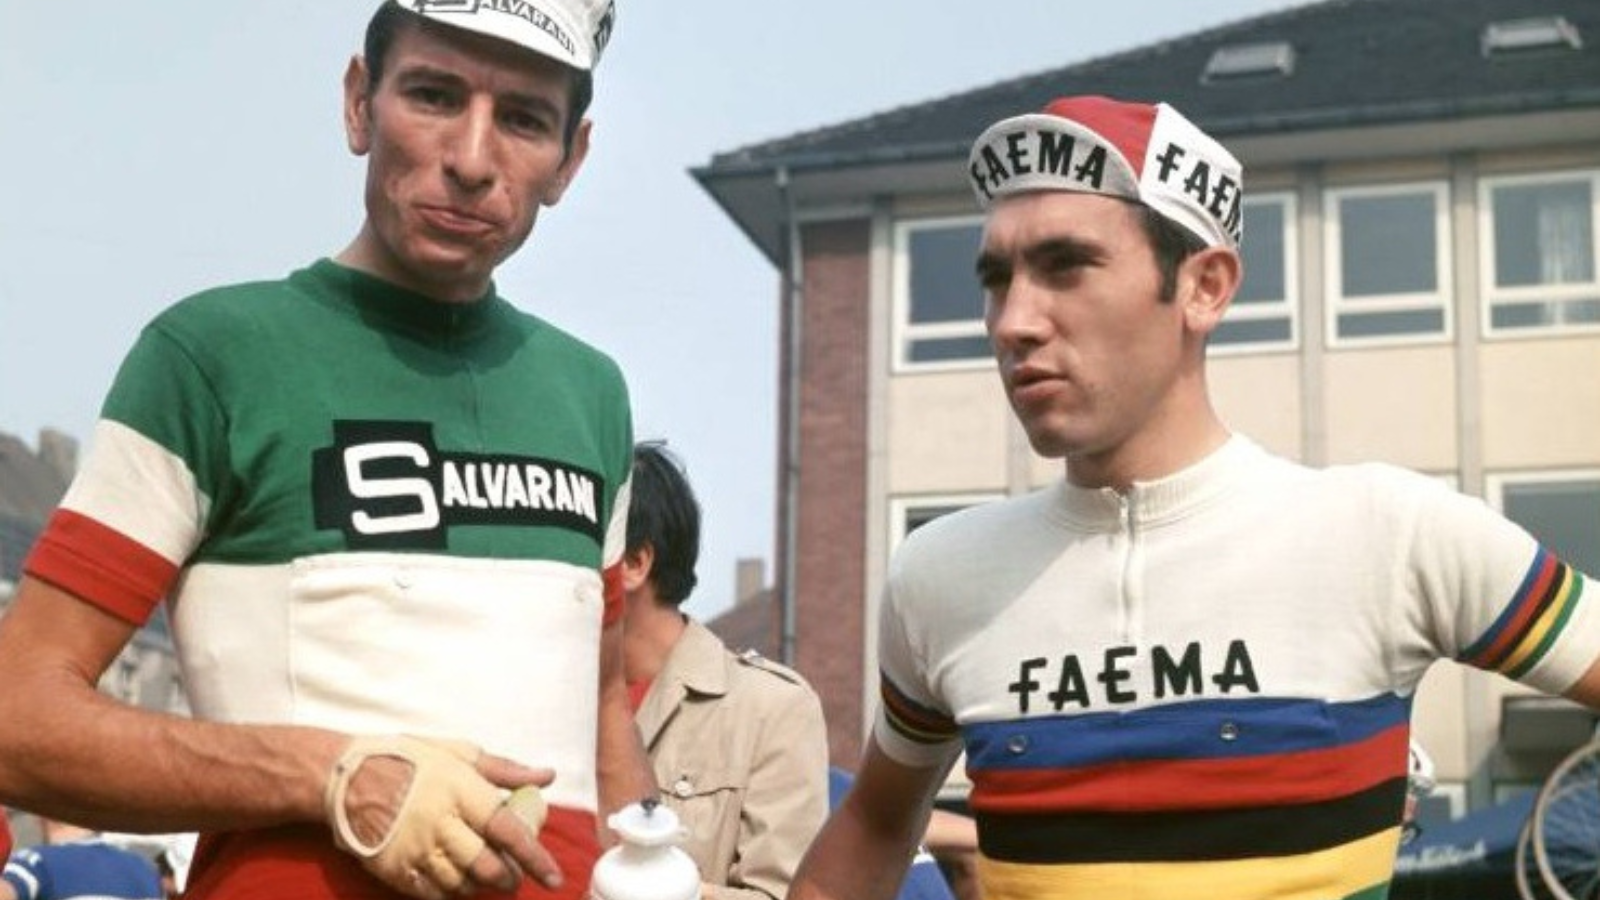 Felice Gimondi in the Italian road champion jersey and Eddy Merckx in the rainbow jersey of the world champions